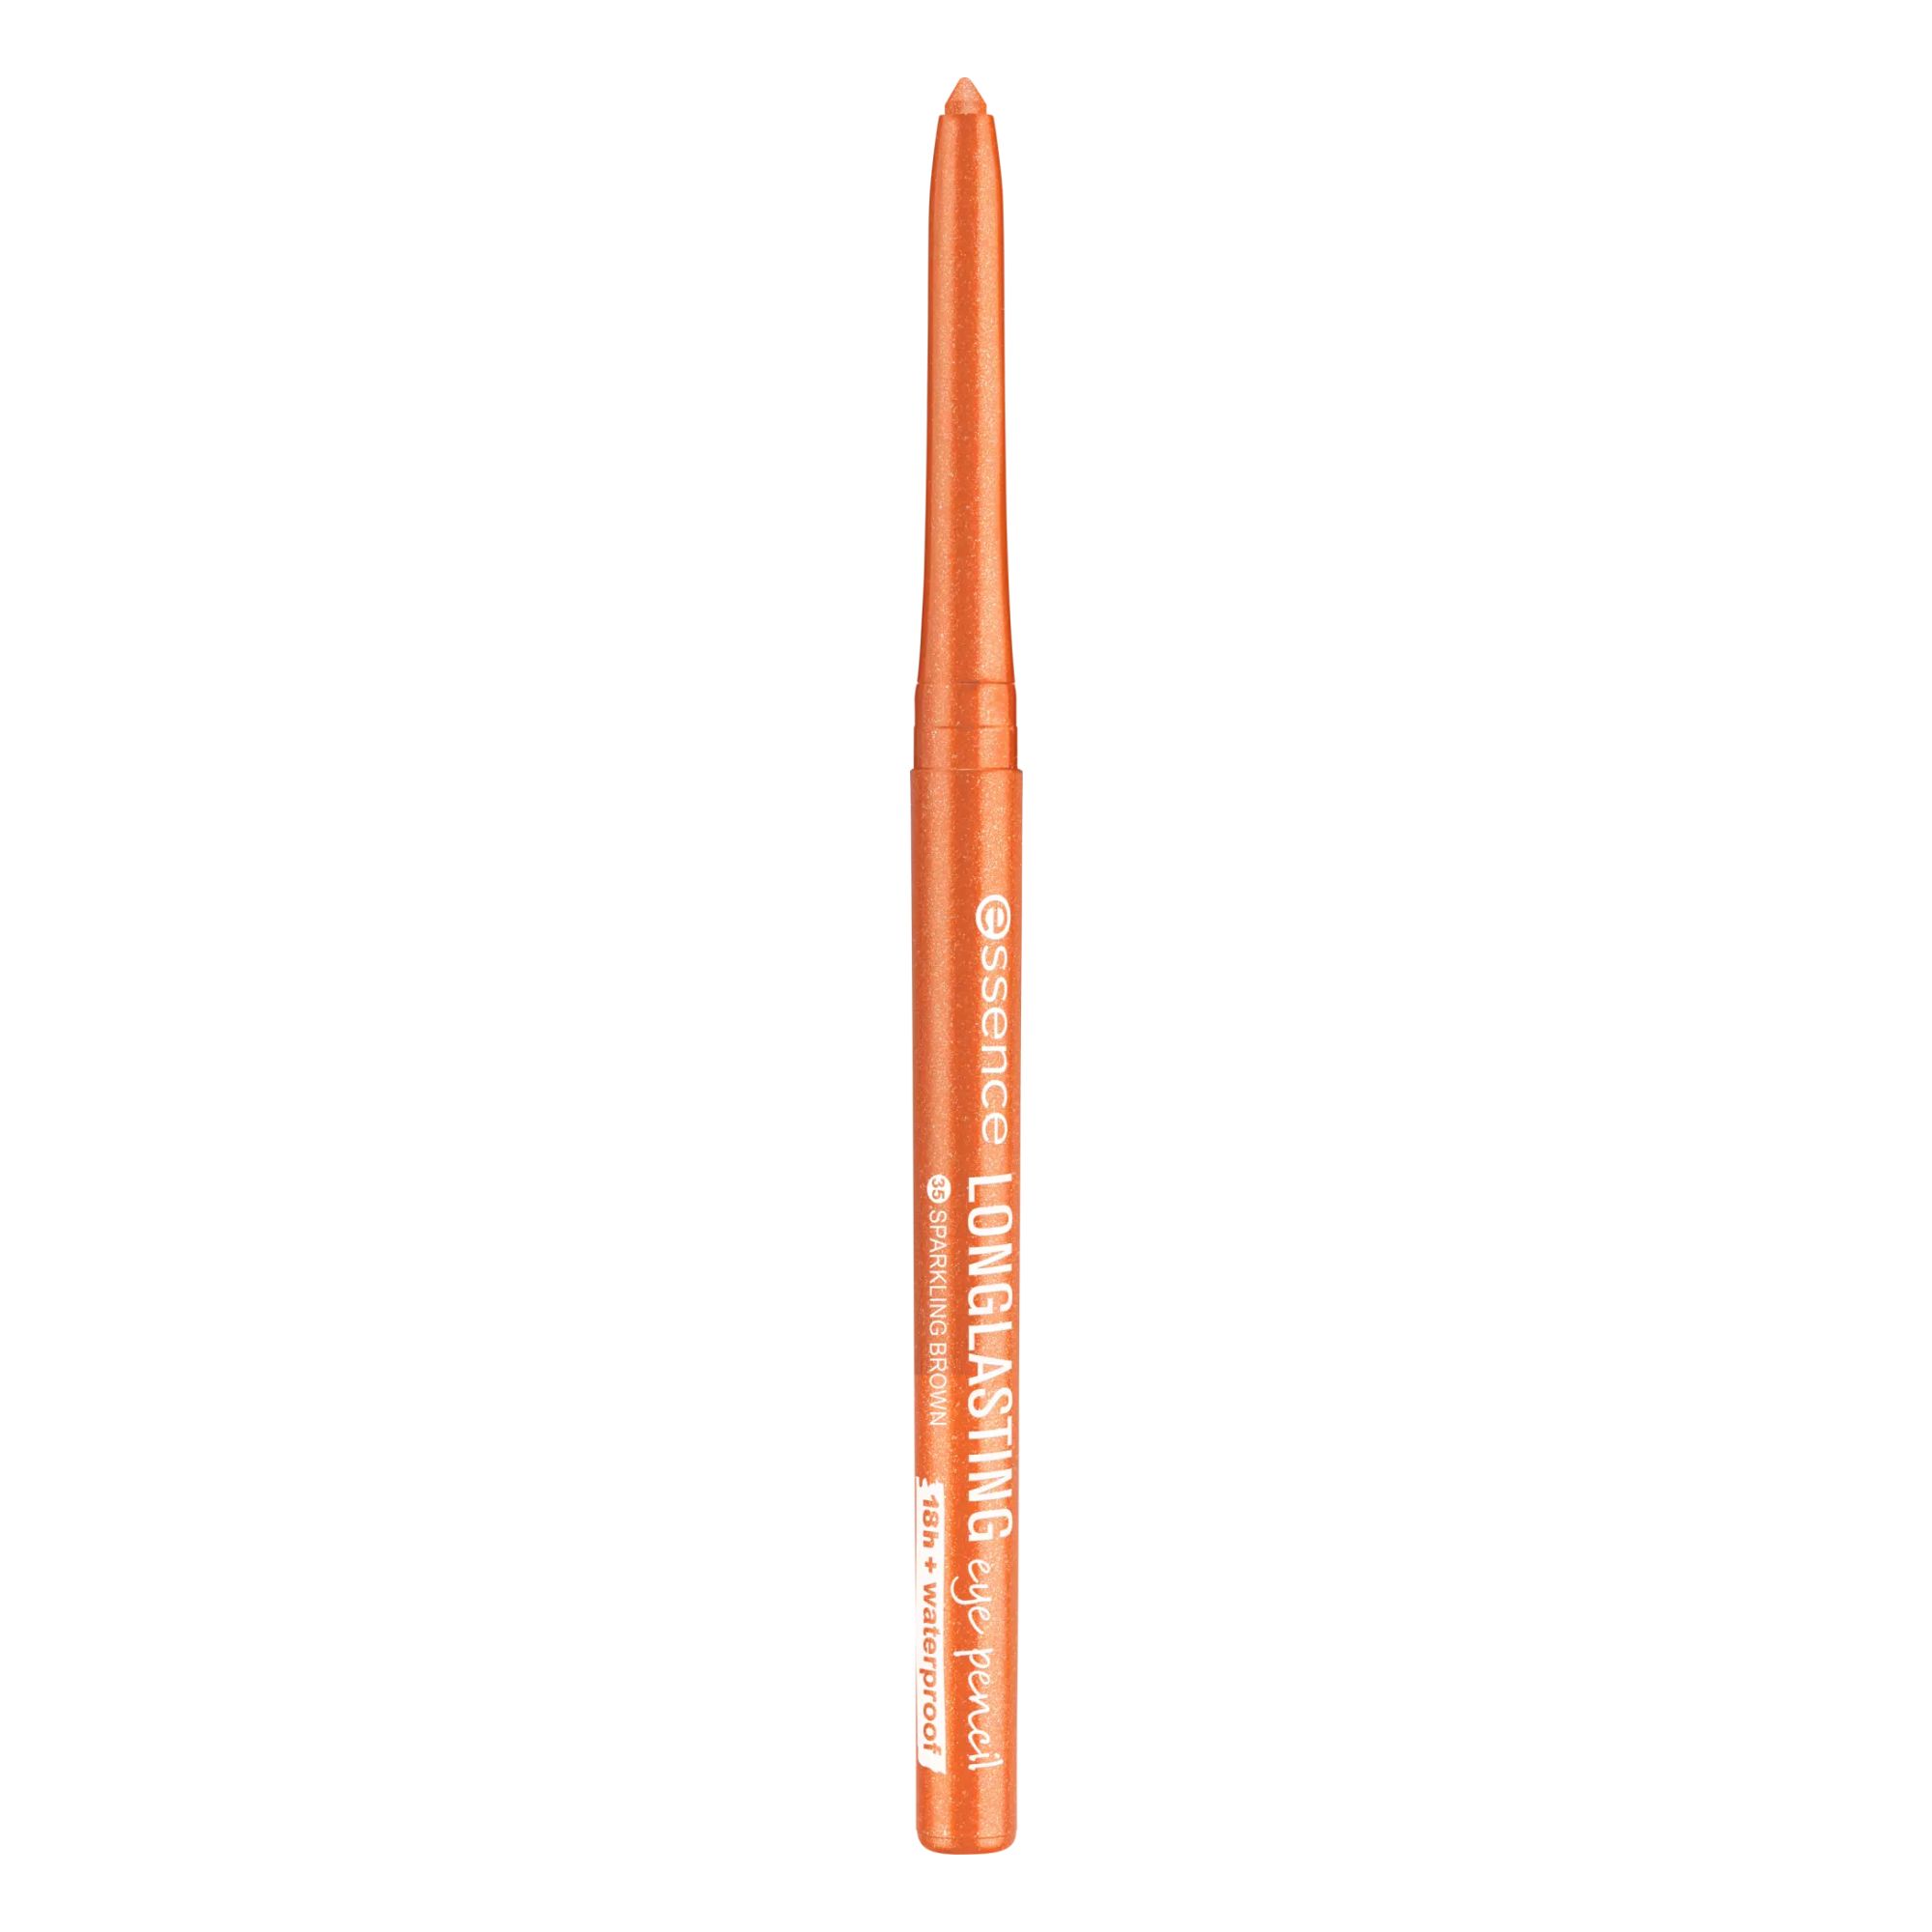 Eyeliner-Stift - Longlasting Eye Pencil